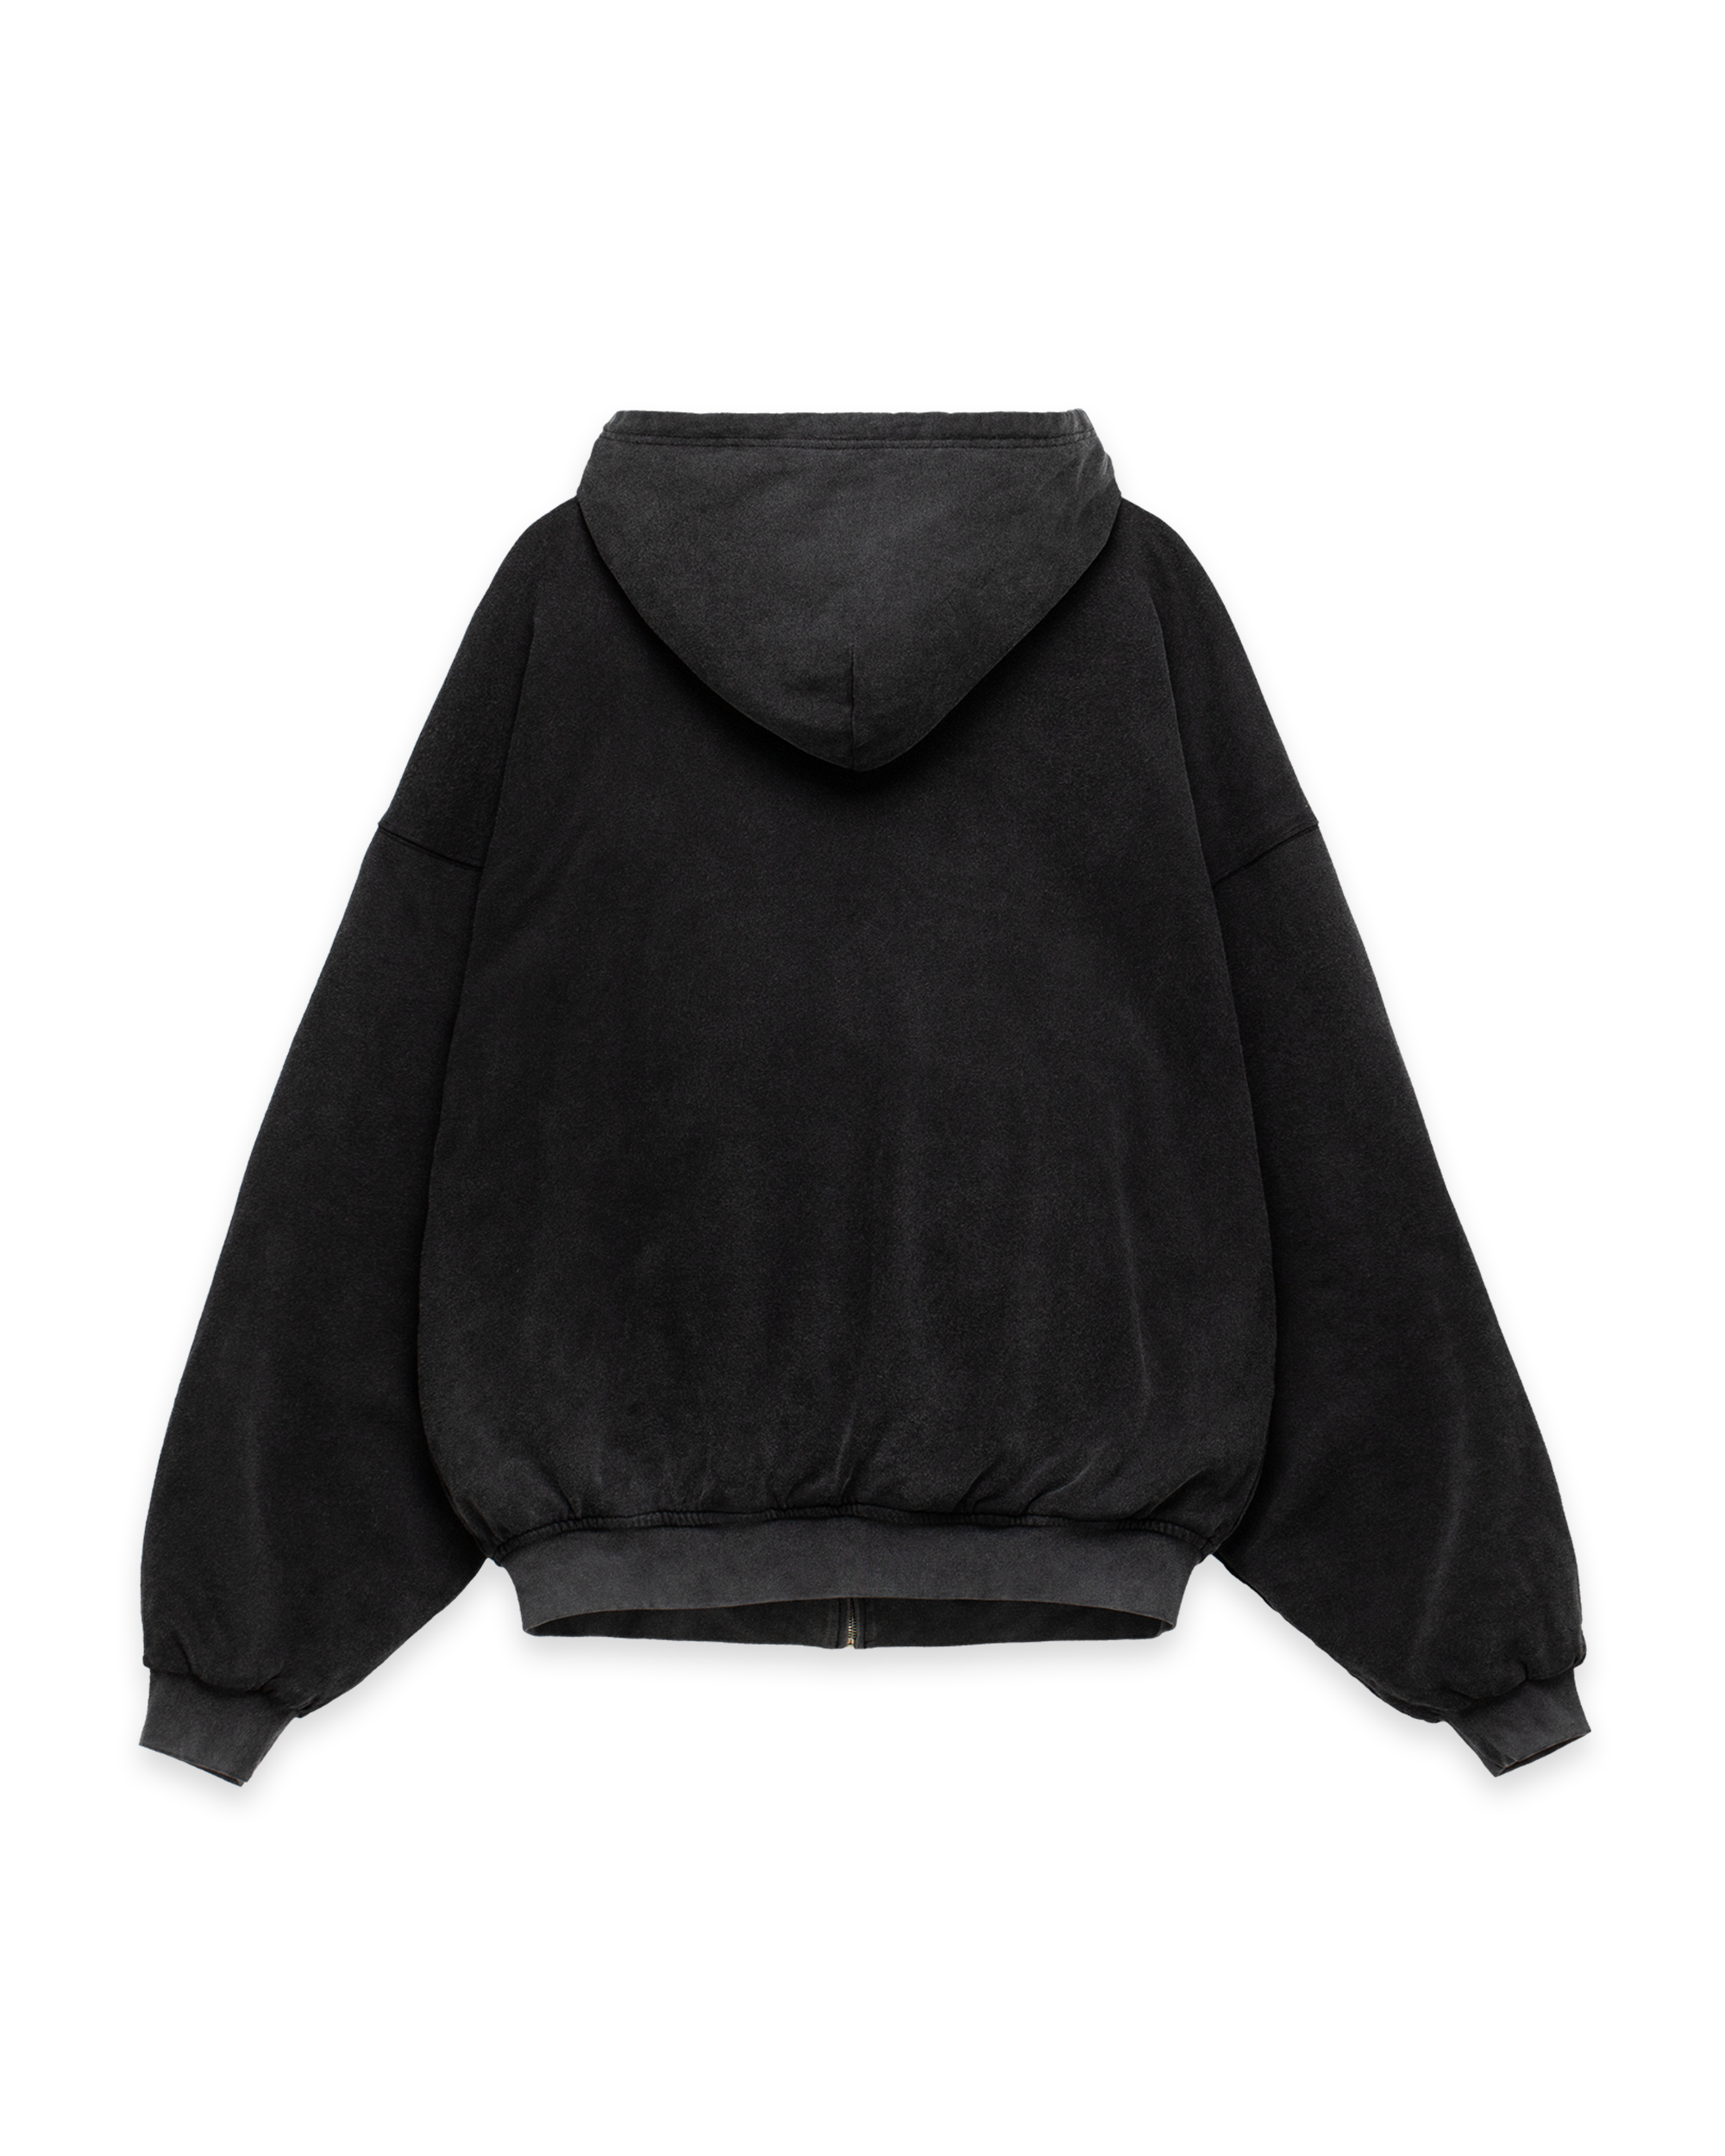 plma double sided hoodie